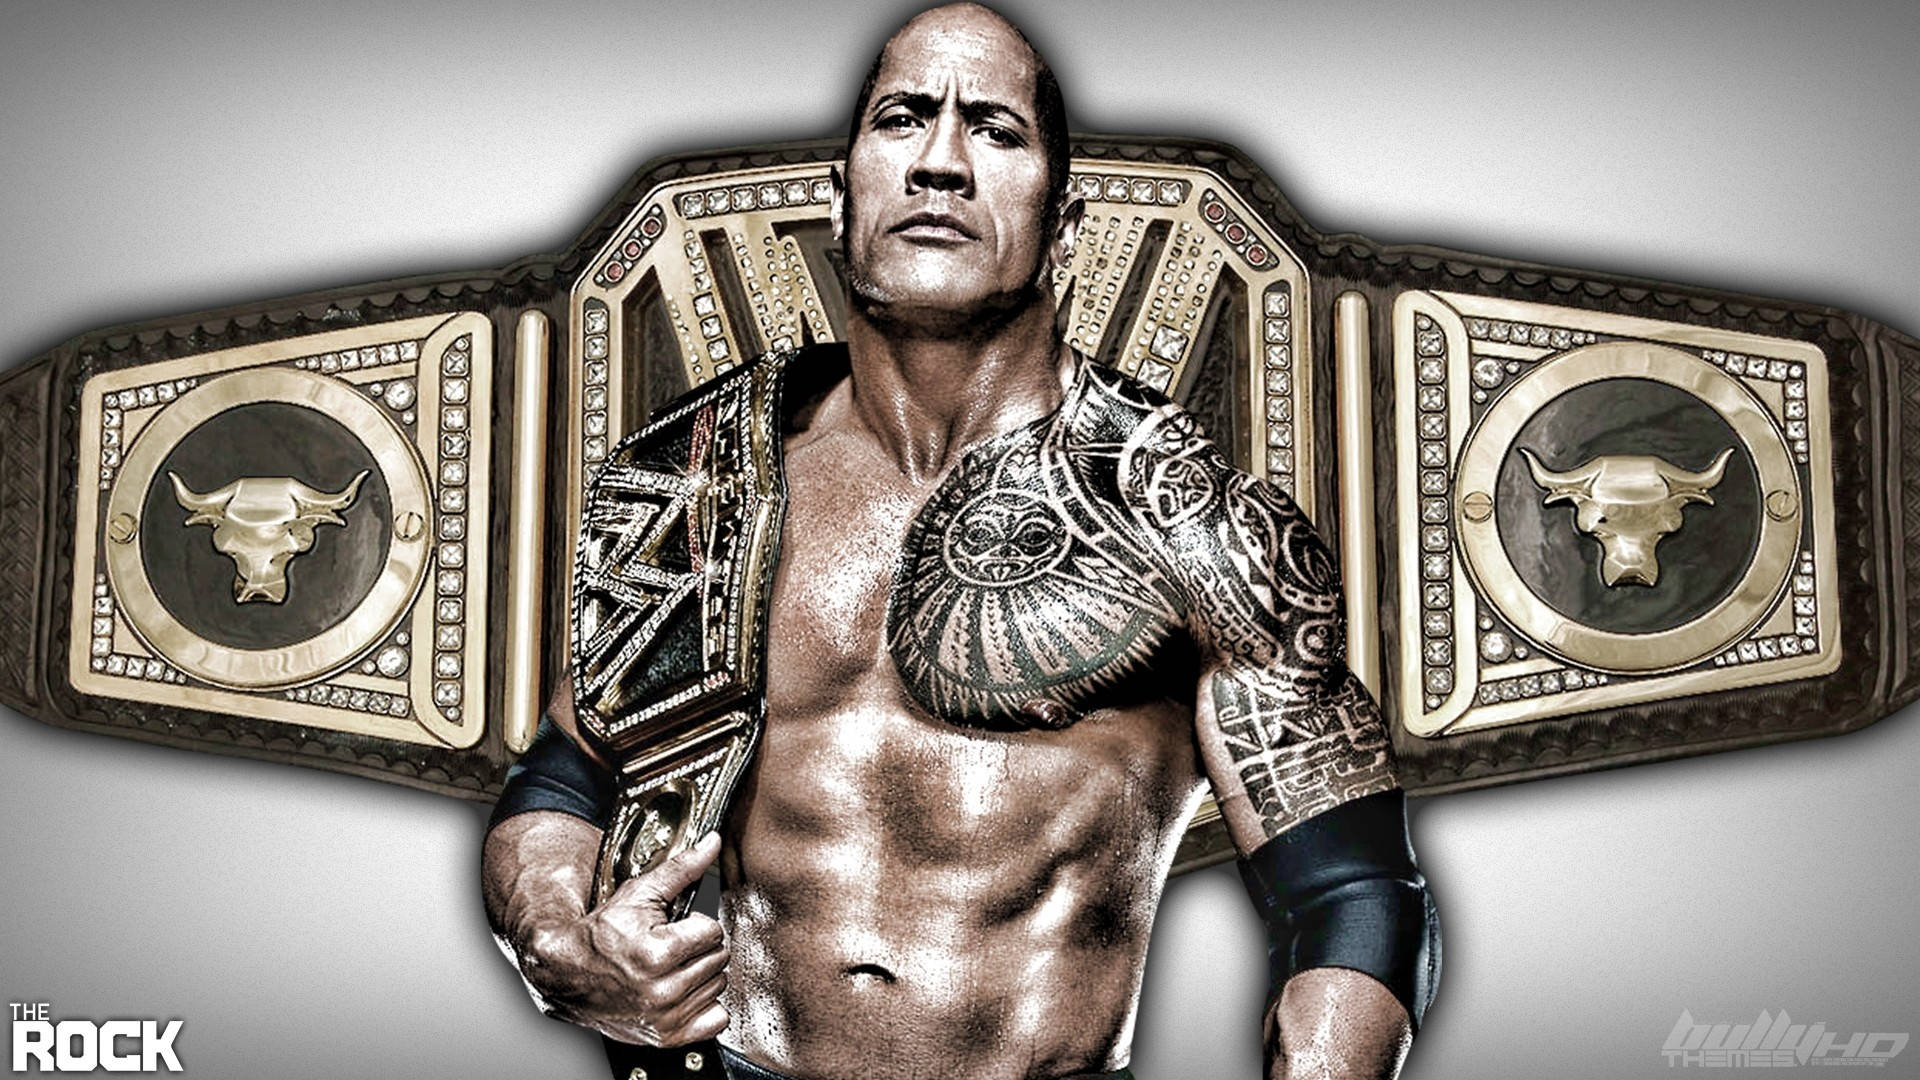 The Rock Championship Title Belt Background